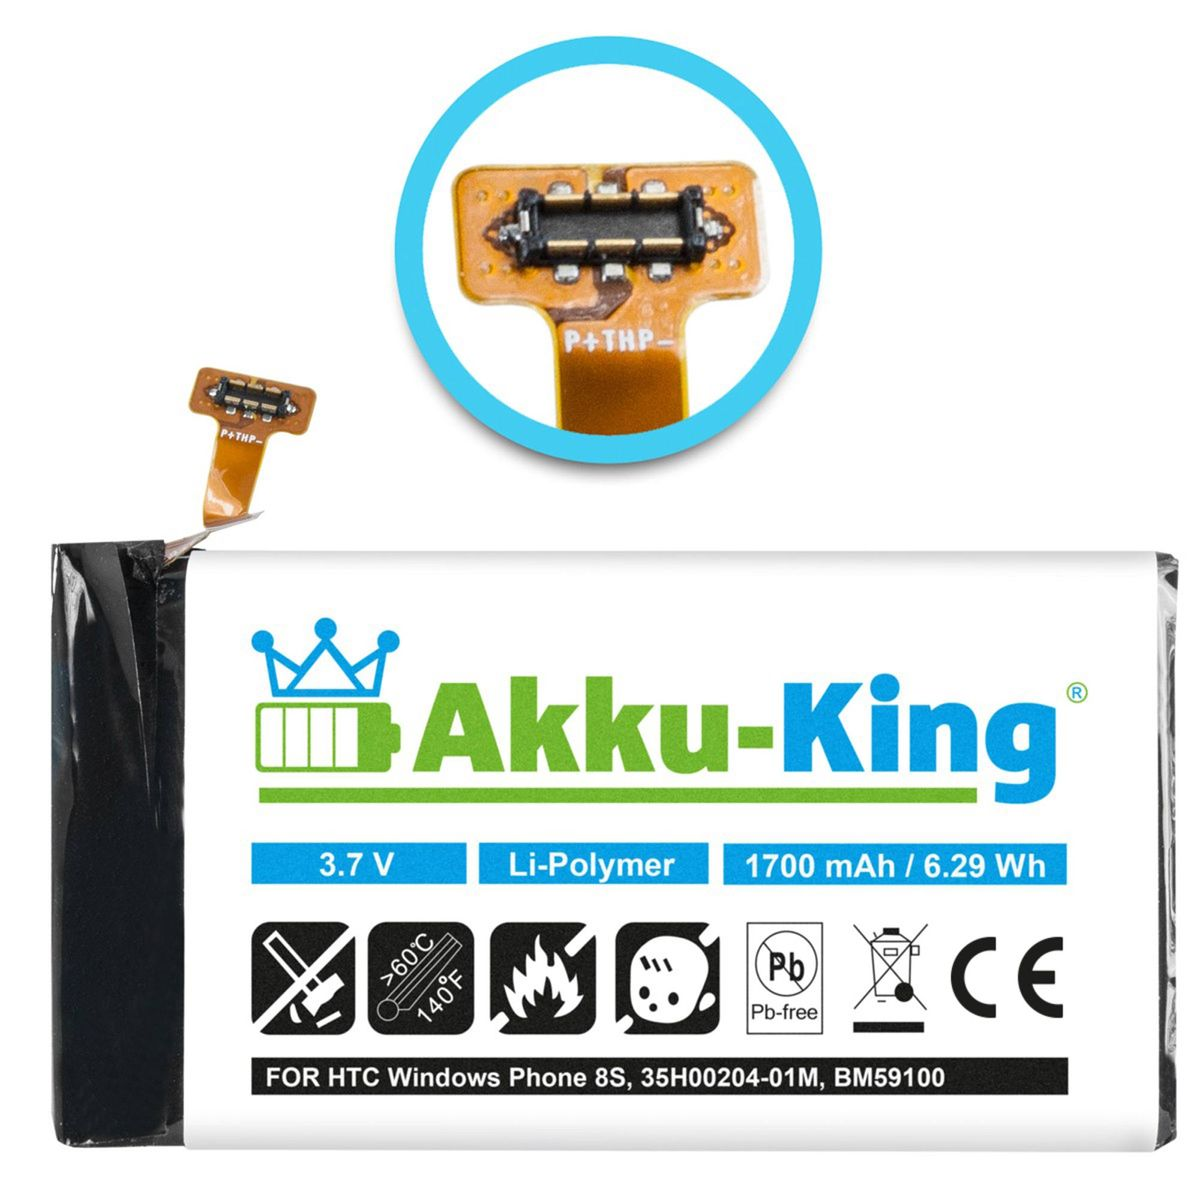 Handy-Akku, mit HTC Li-Polymer AKKU-KING Volt, kompatibel 35H00204-01M 3.7 Akku 1700mAh